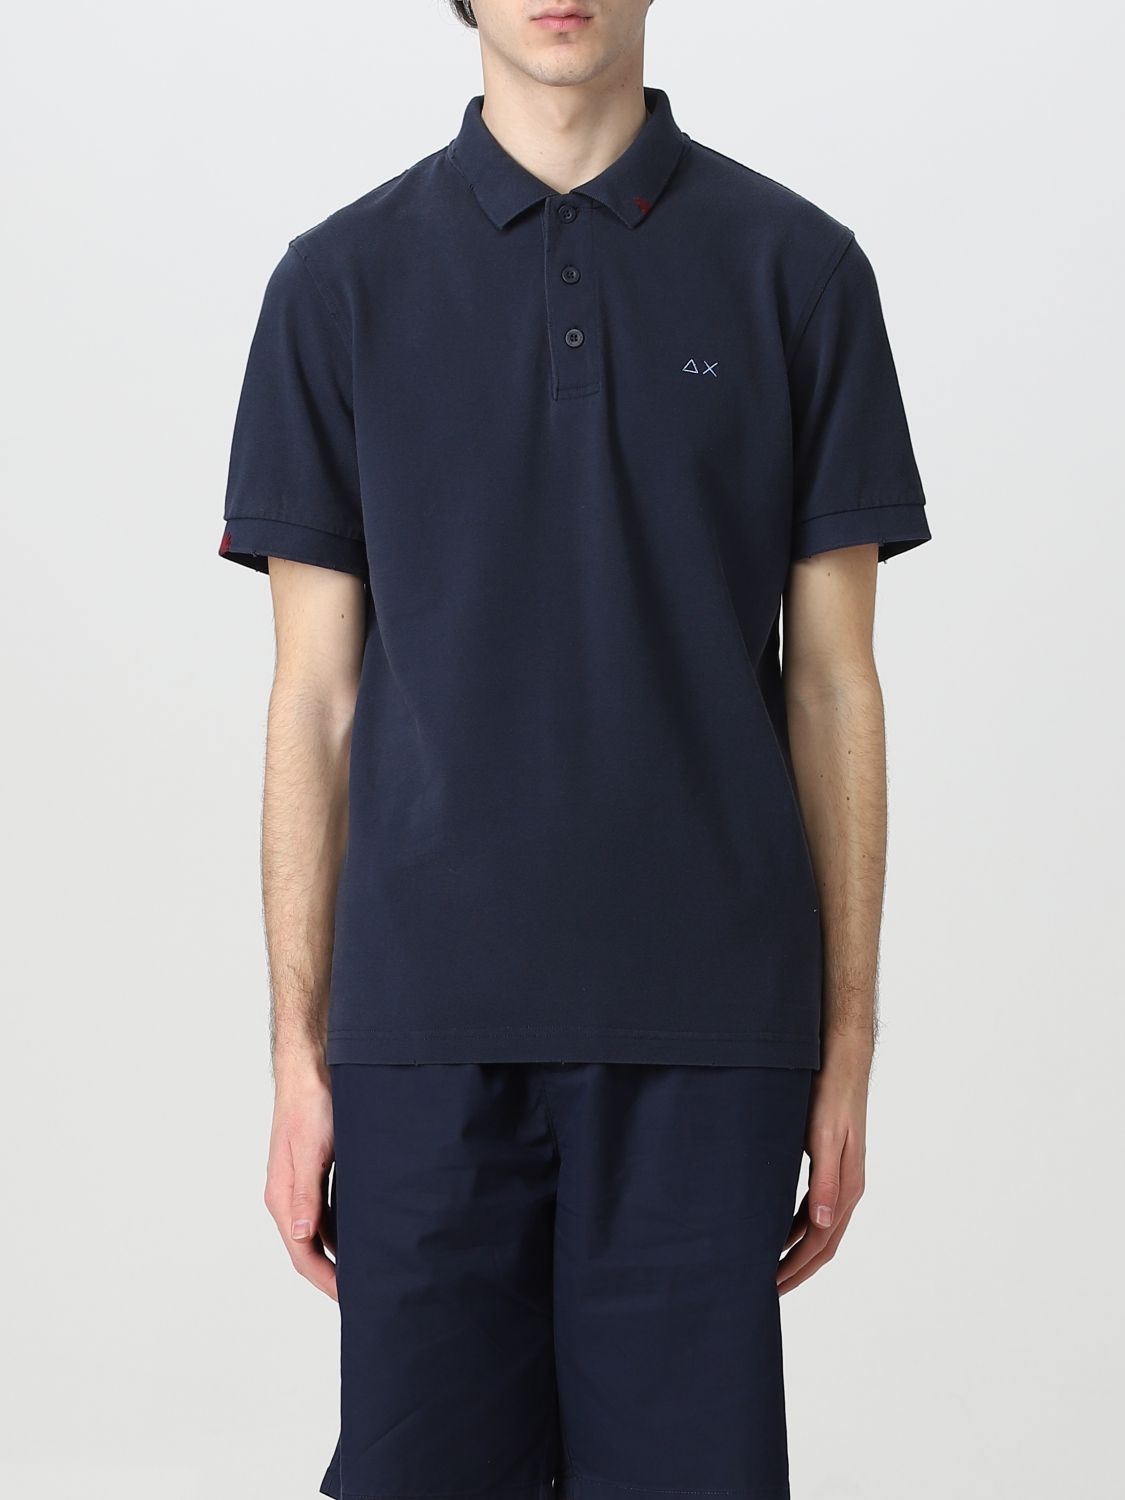 SUN 68: polo shirt for man - Navy | Sun 68 polo shirt A33101 online on ...